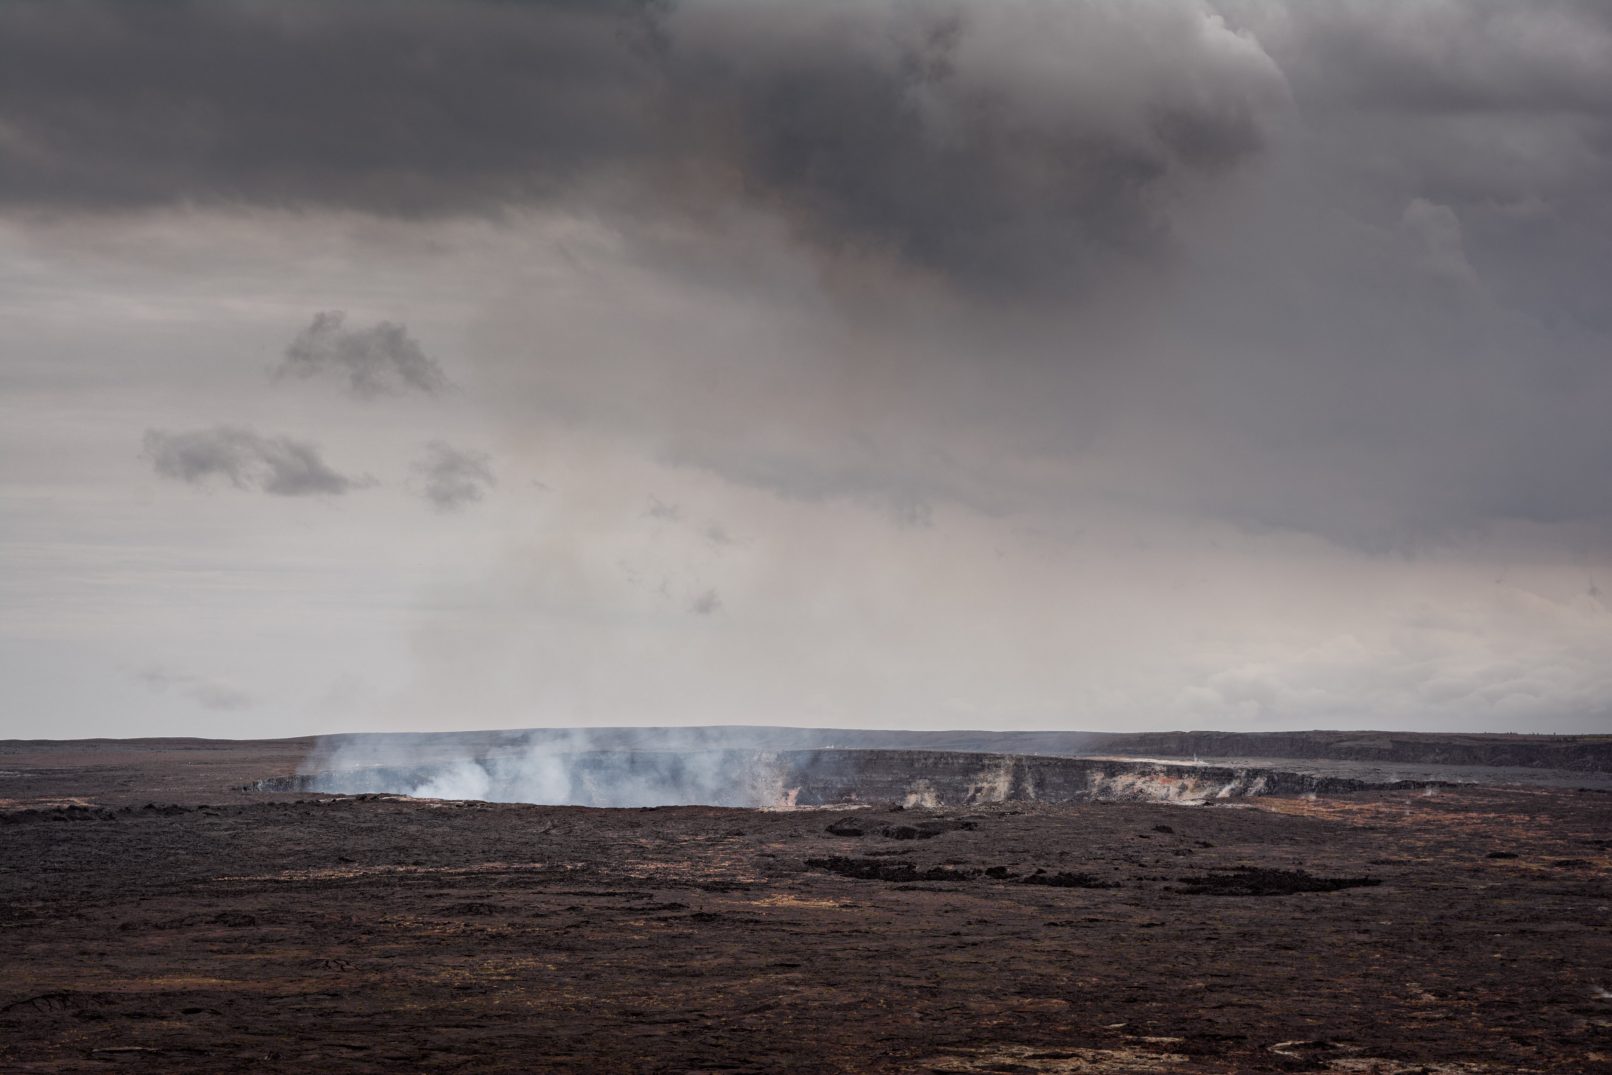 Hawaii Kilauea crater with smoke